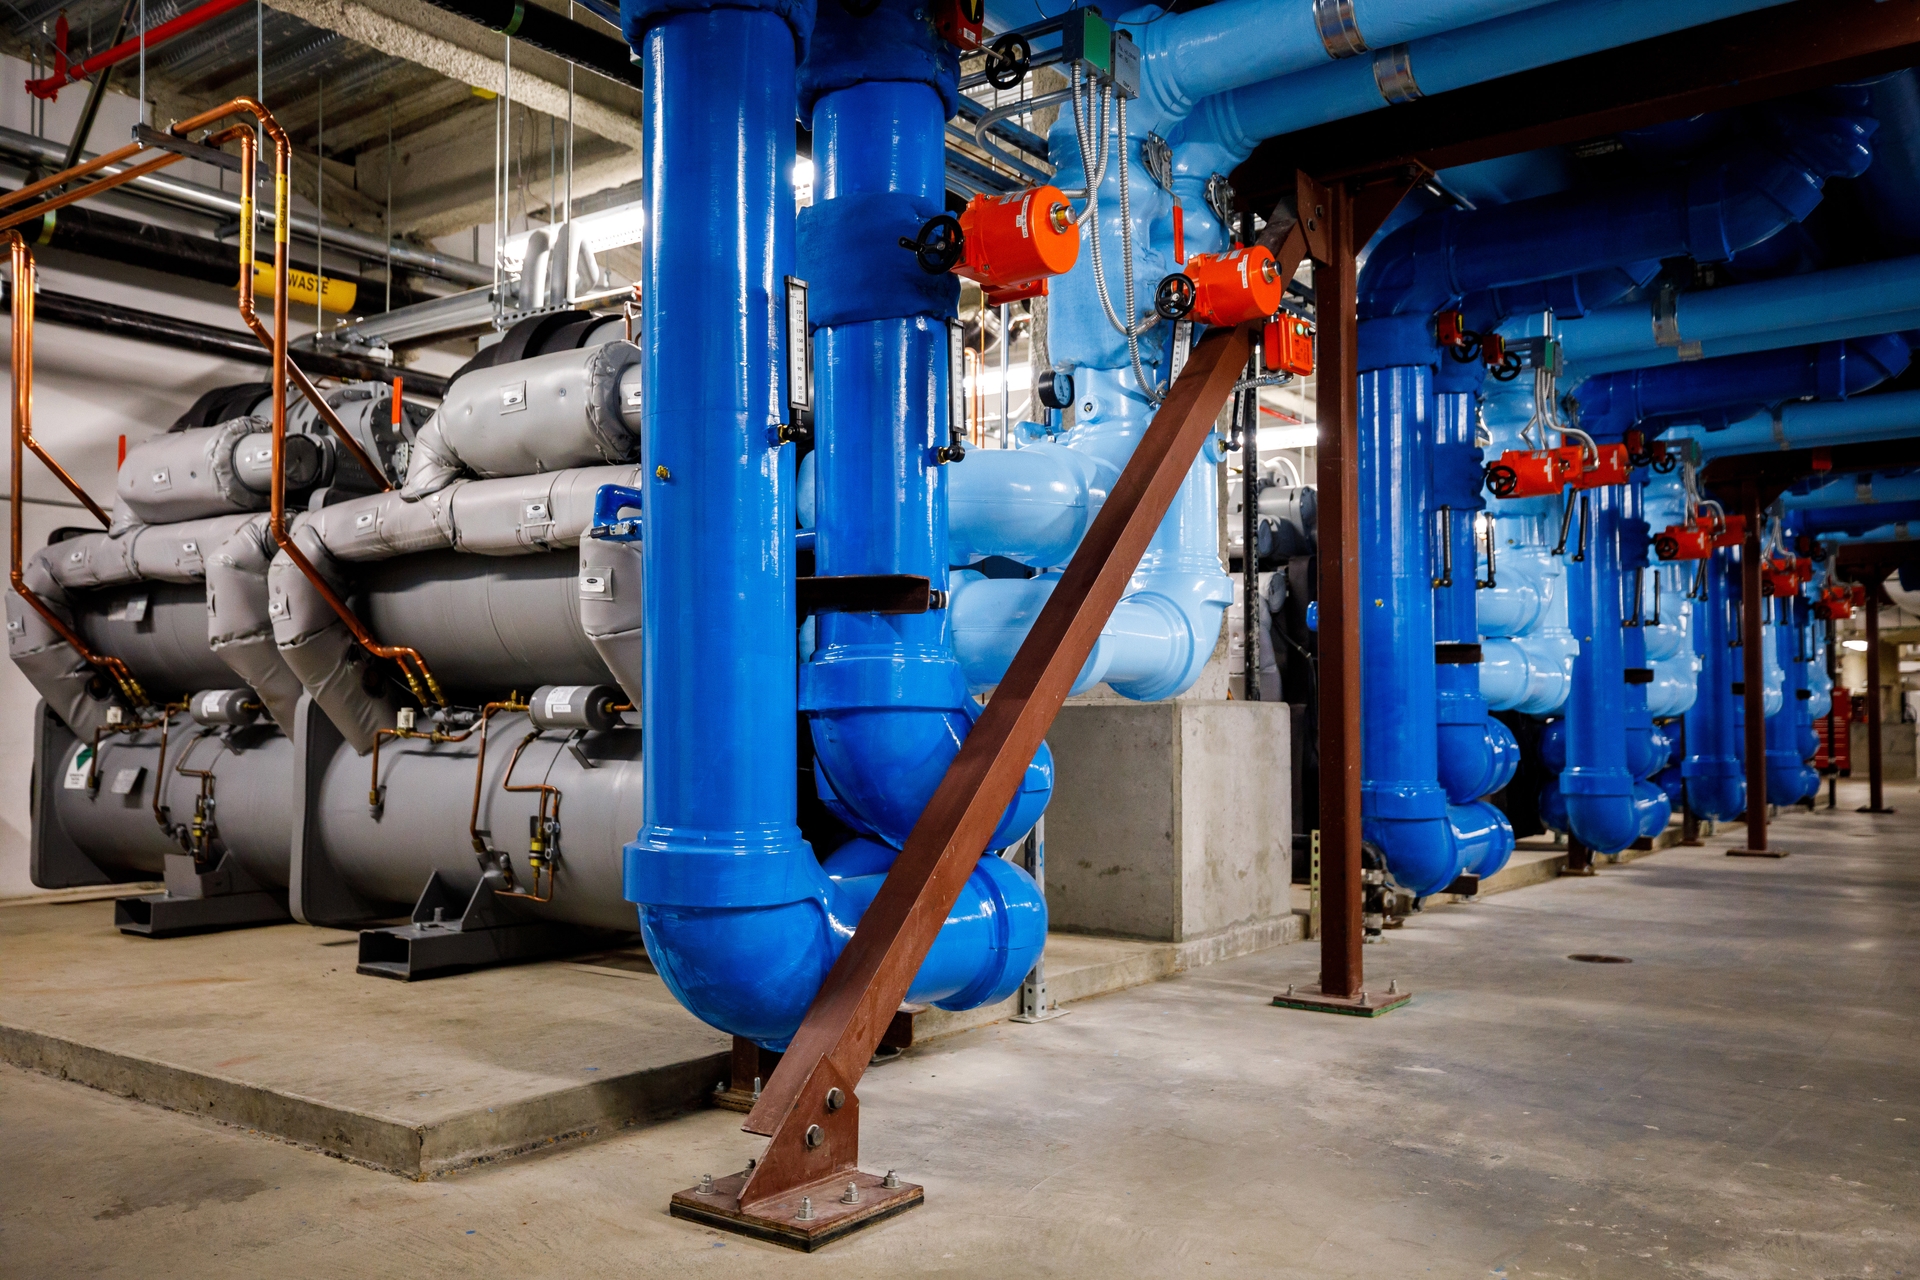 Five industrial chillers in the HVAC plant hidden in Doppler's basement.